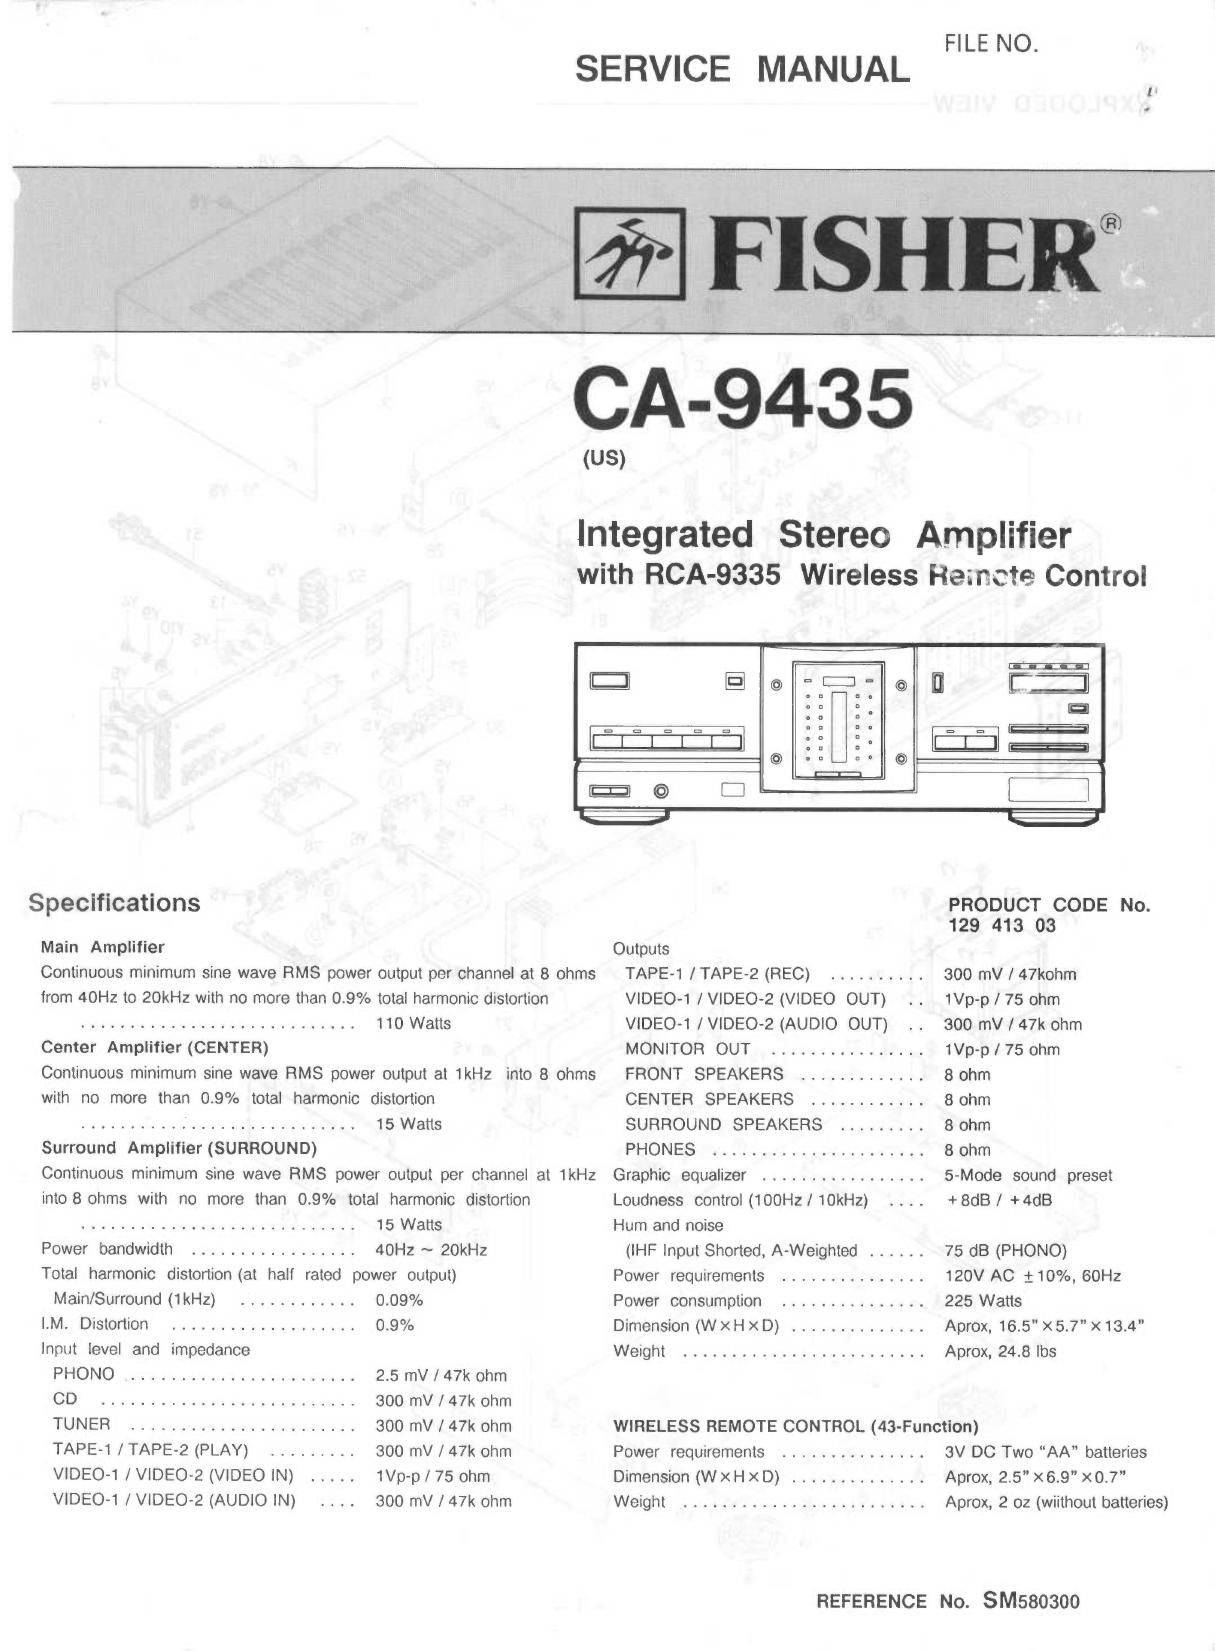 Fisher CA-9435